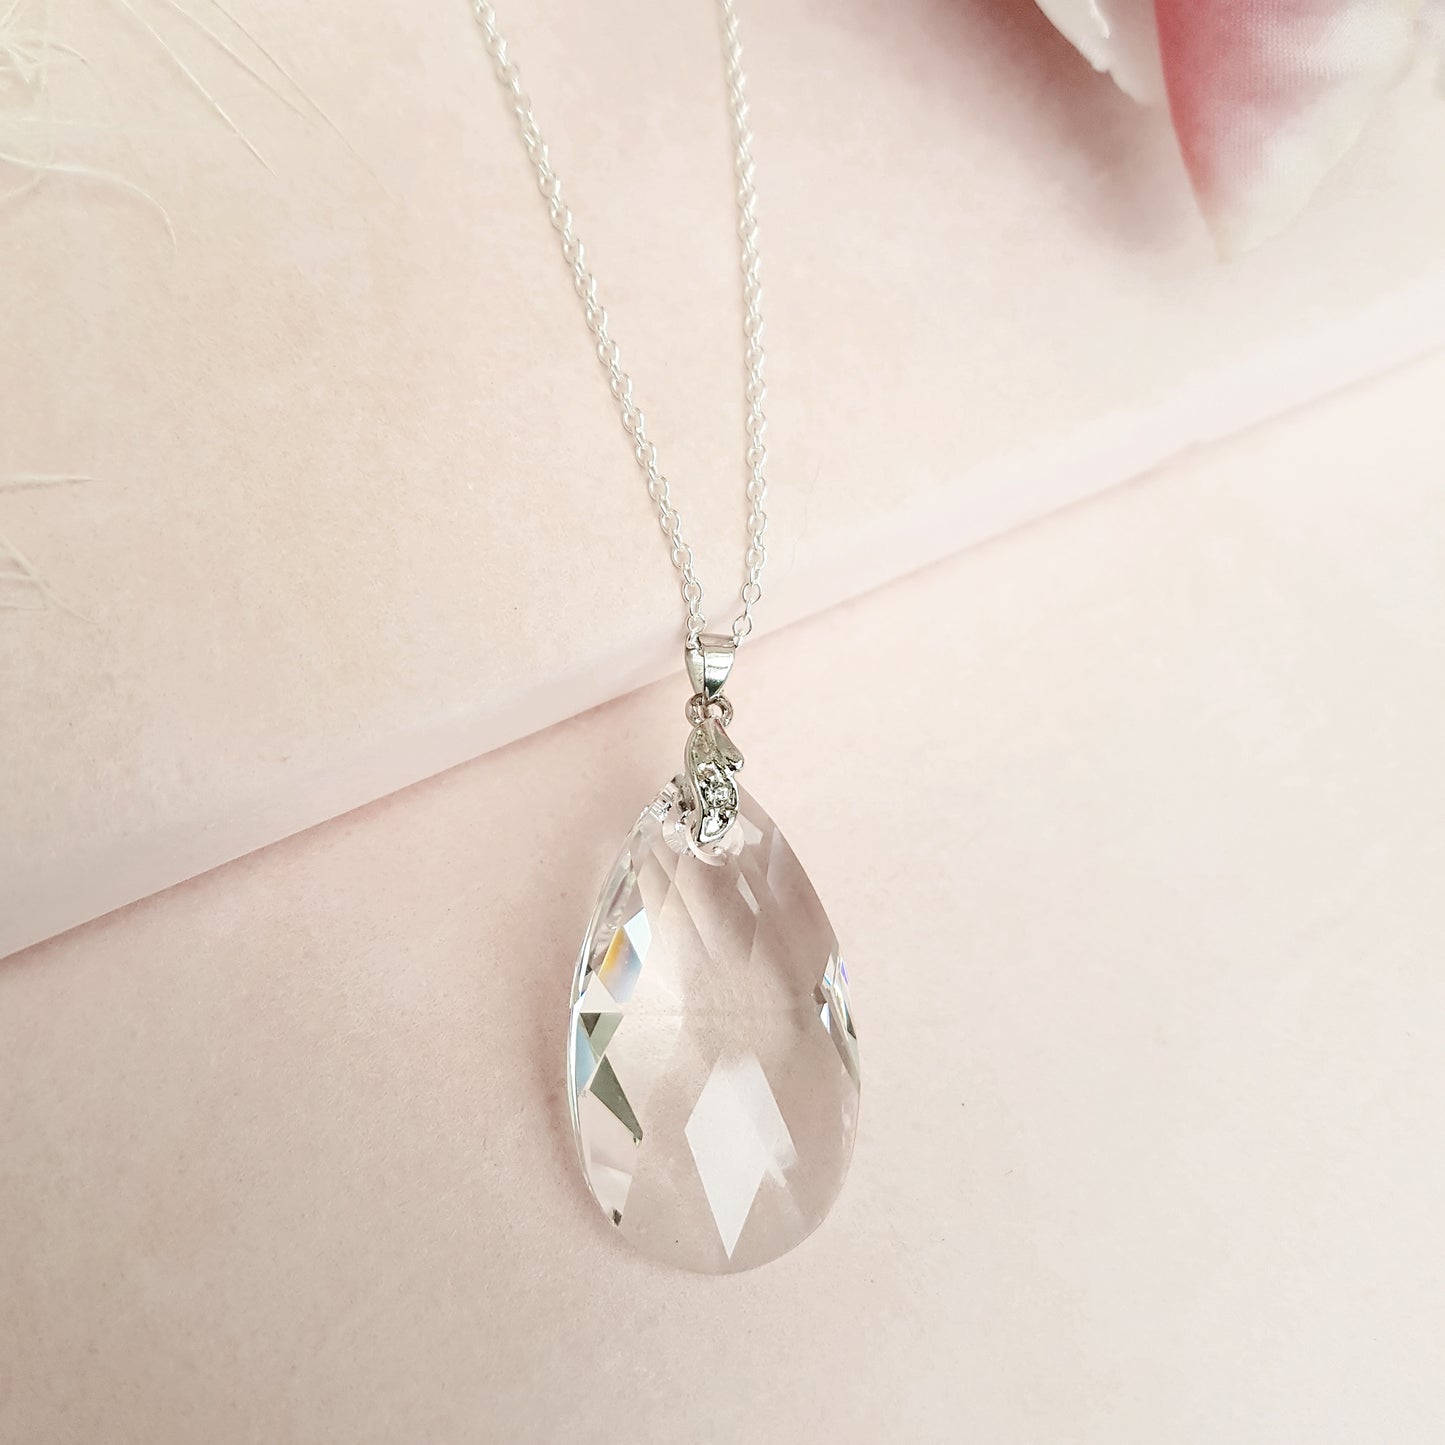 Dazzling Limited Edition Swarovski Crystal Teardrop Necklace